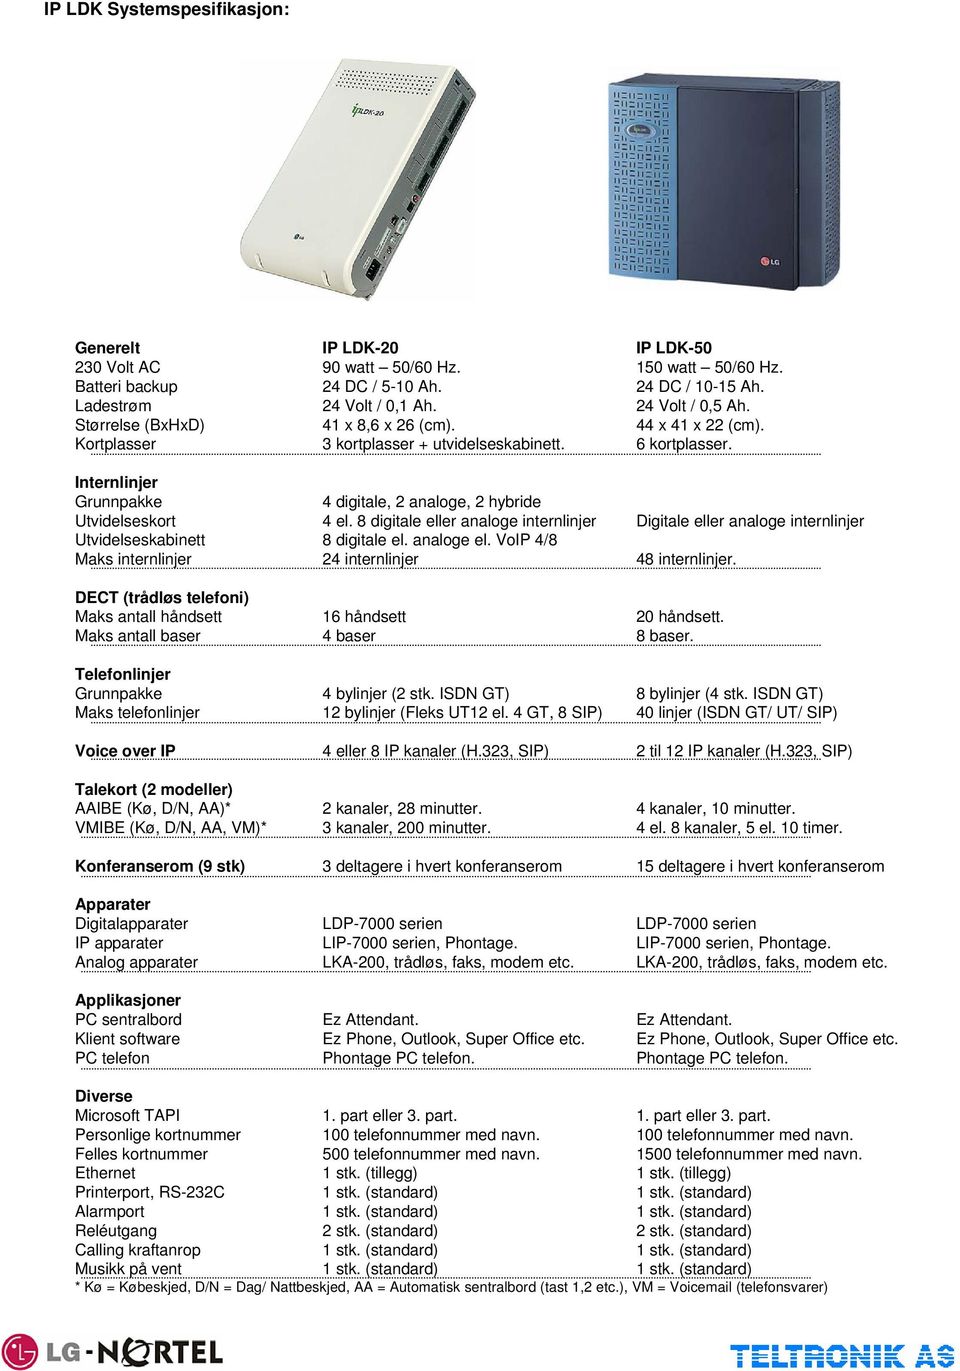 Apparater Digitalapparater IP apparater Analog apparater Applikasjoner PC sentralbord Klient software PC telefon IP LDK-20 90 watt 50/60 Hz. 24 DC / 5-10 Ah. 24 Volt / 0,1 Ah. 41 x 8,6 x 26 (cm).